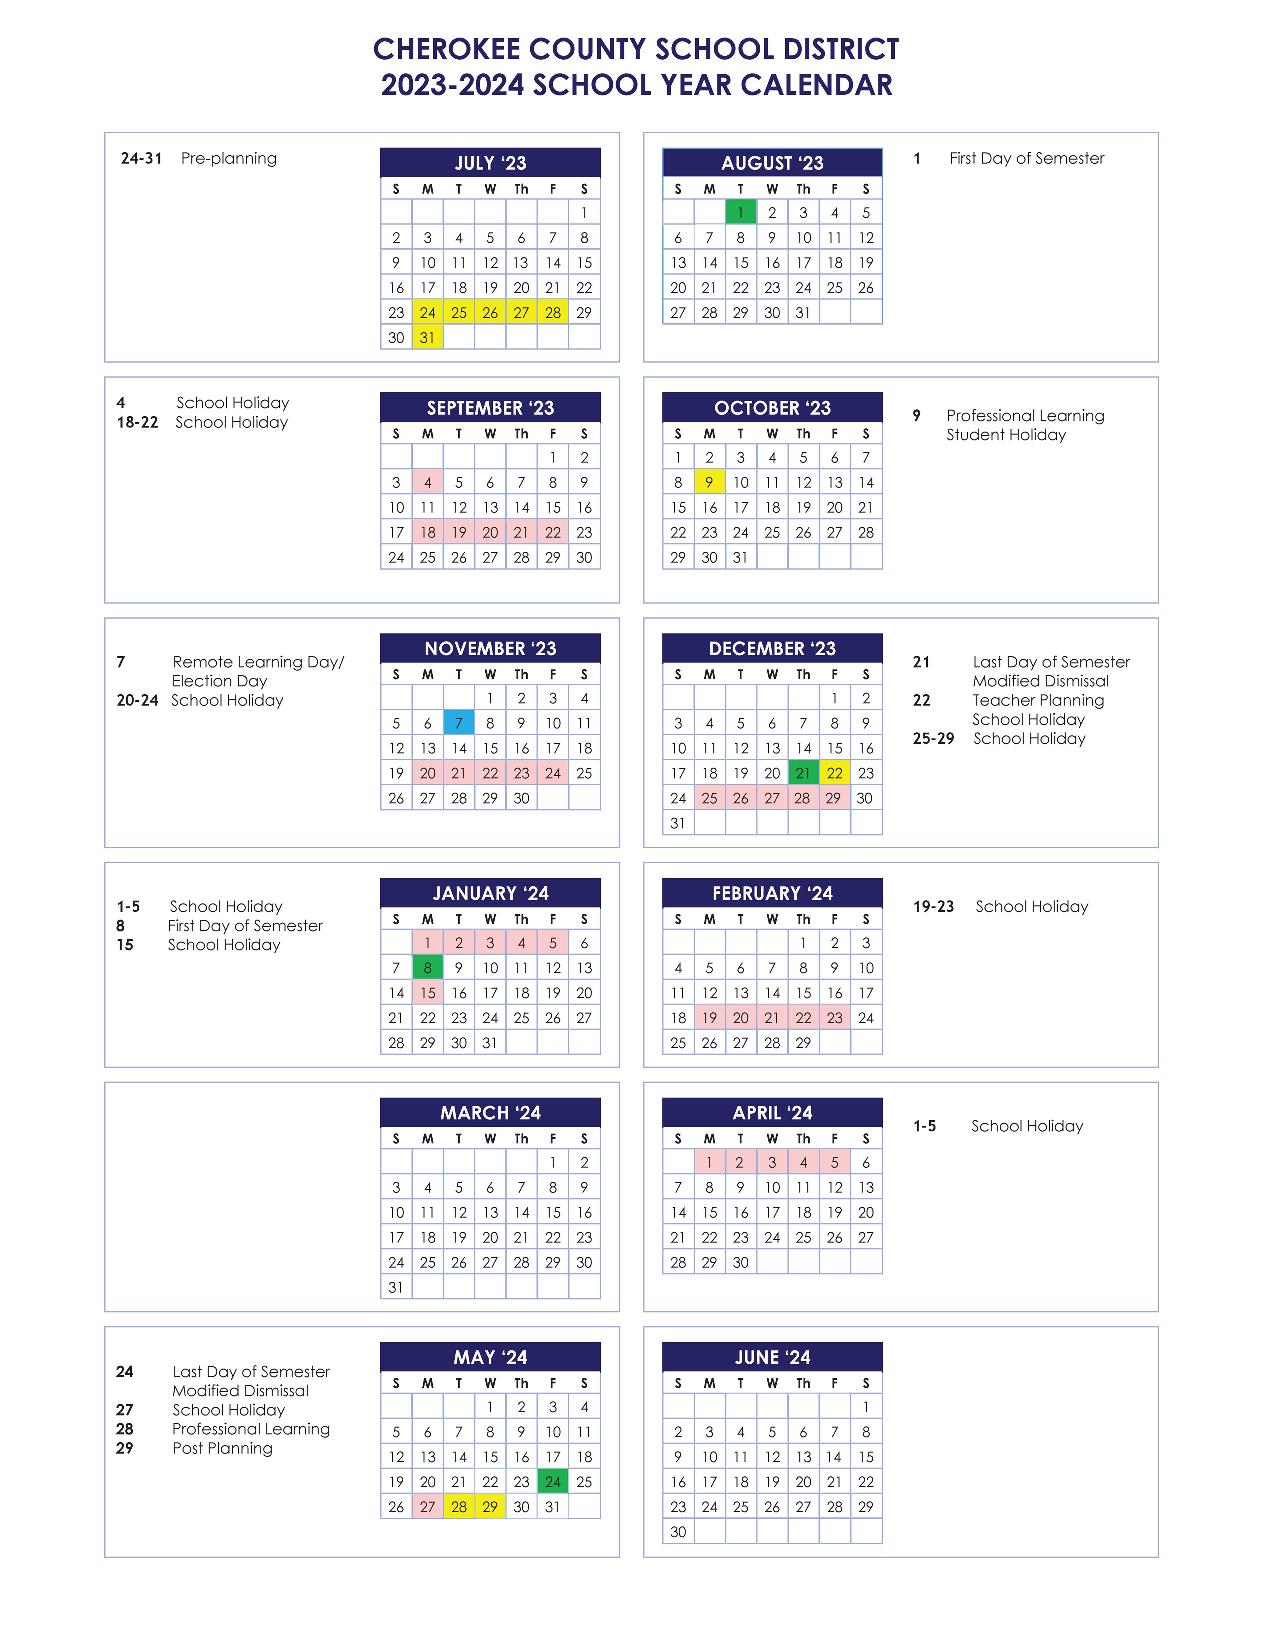 Cherokee County School District Calendar 20232024 in PDF